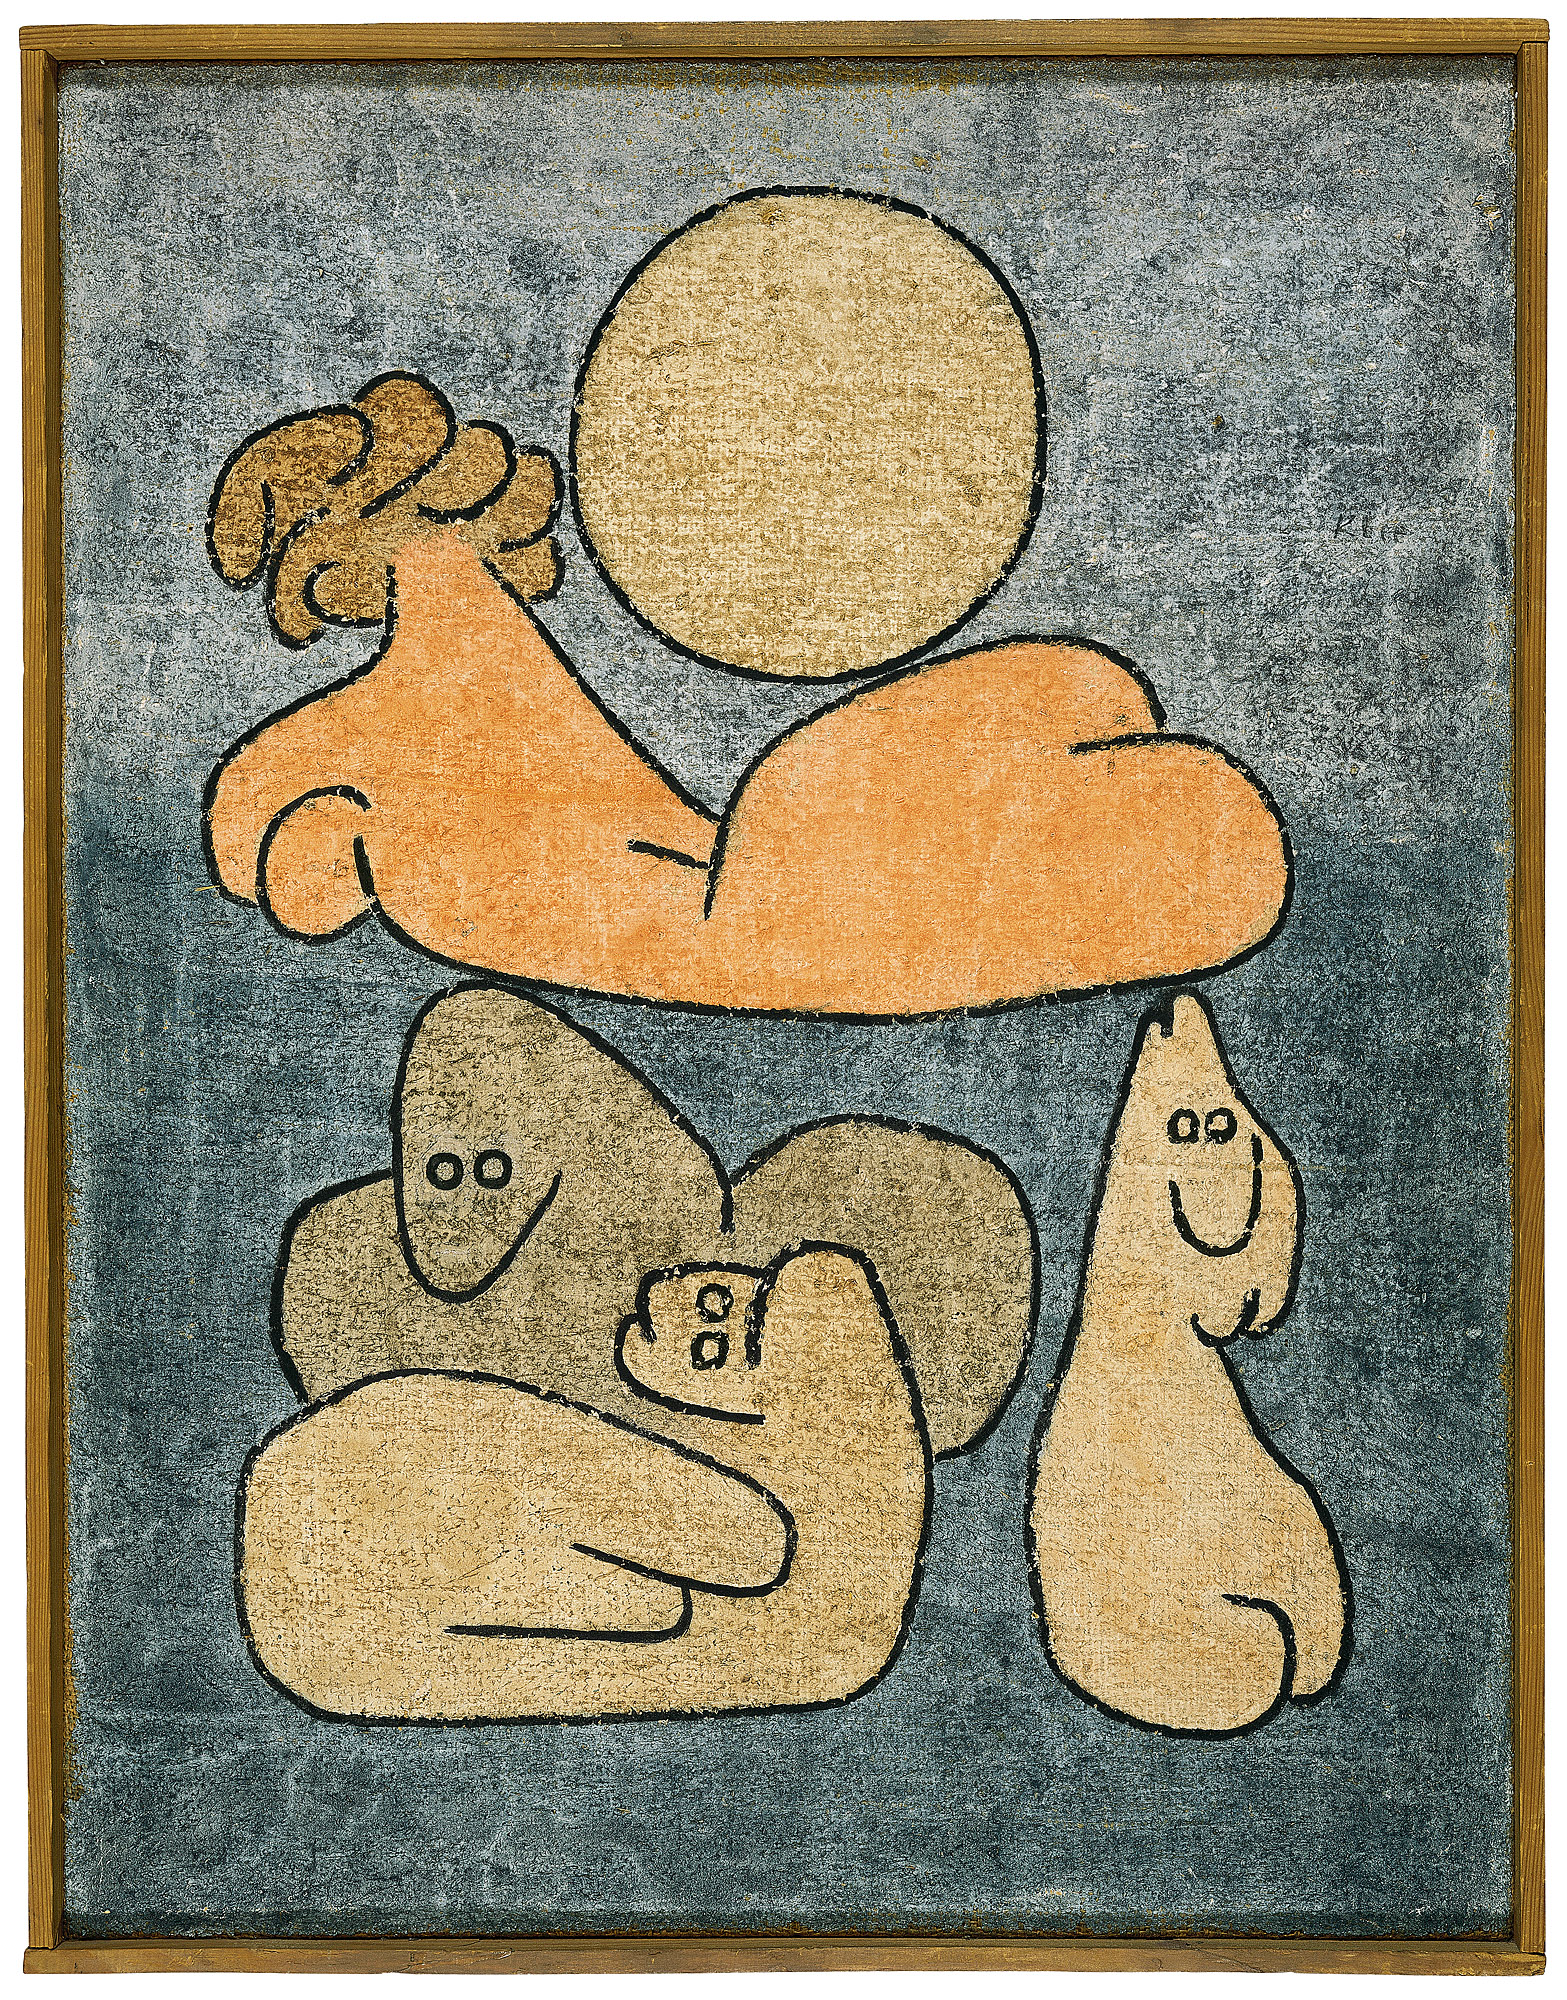 The Torso and Kin (at full moon) by Paul Klee - 1939 - 65 x 50 cm Zentrum Paul Klee